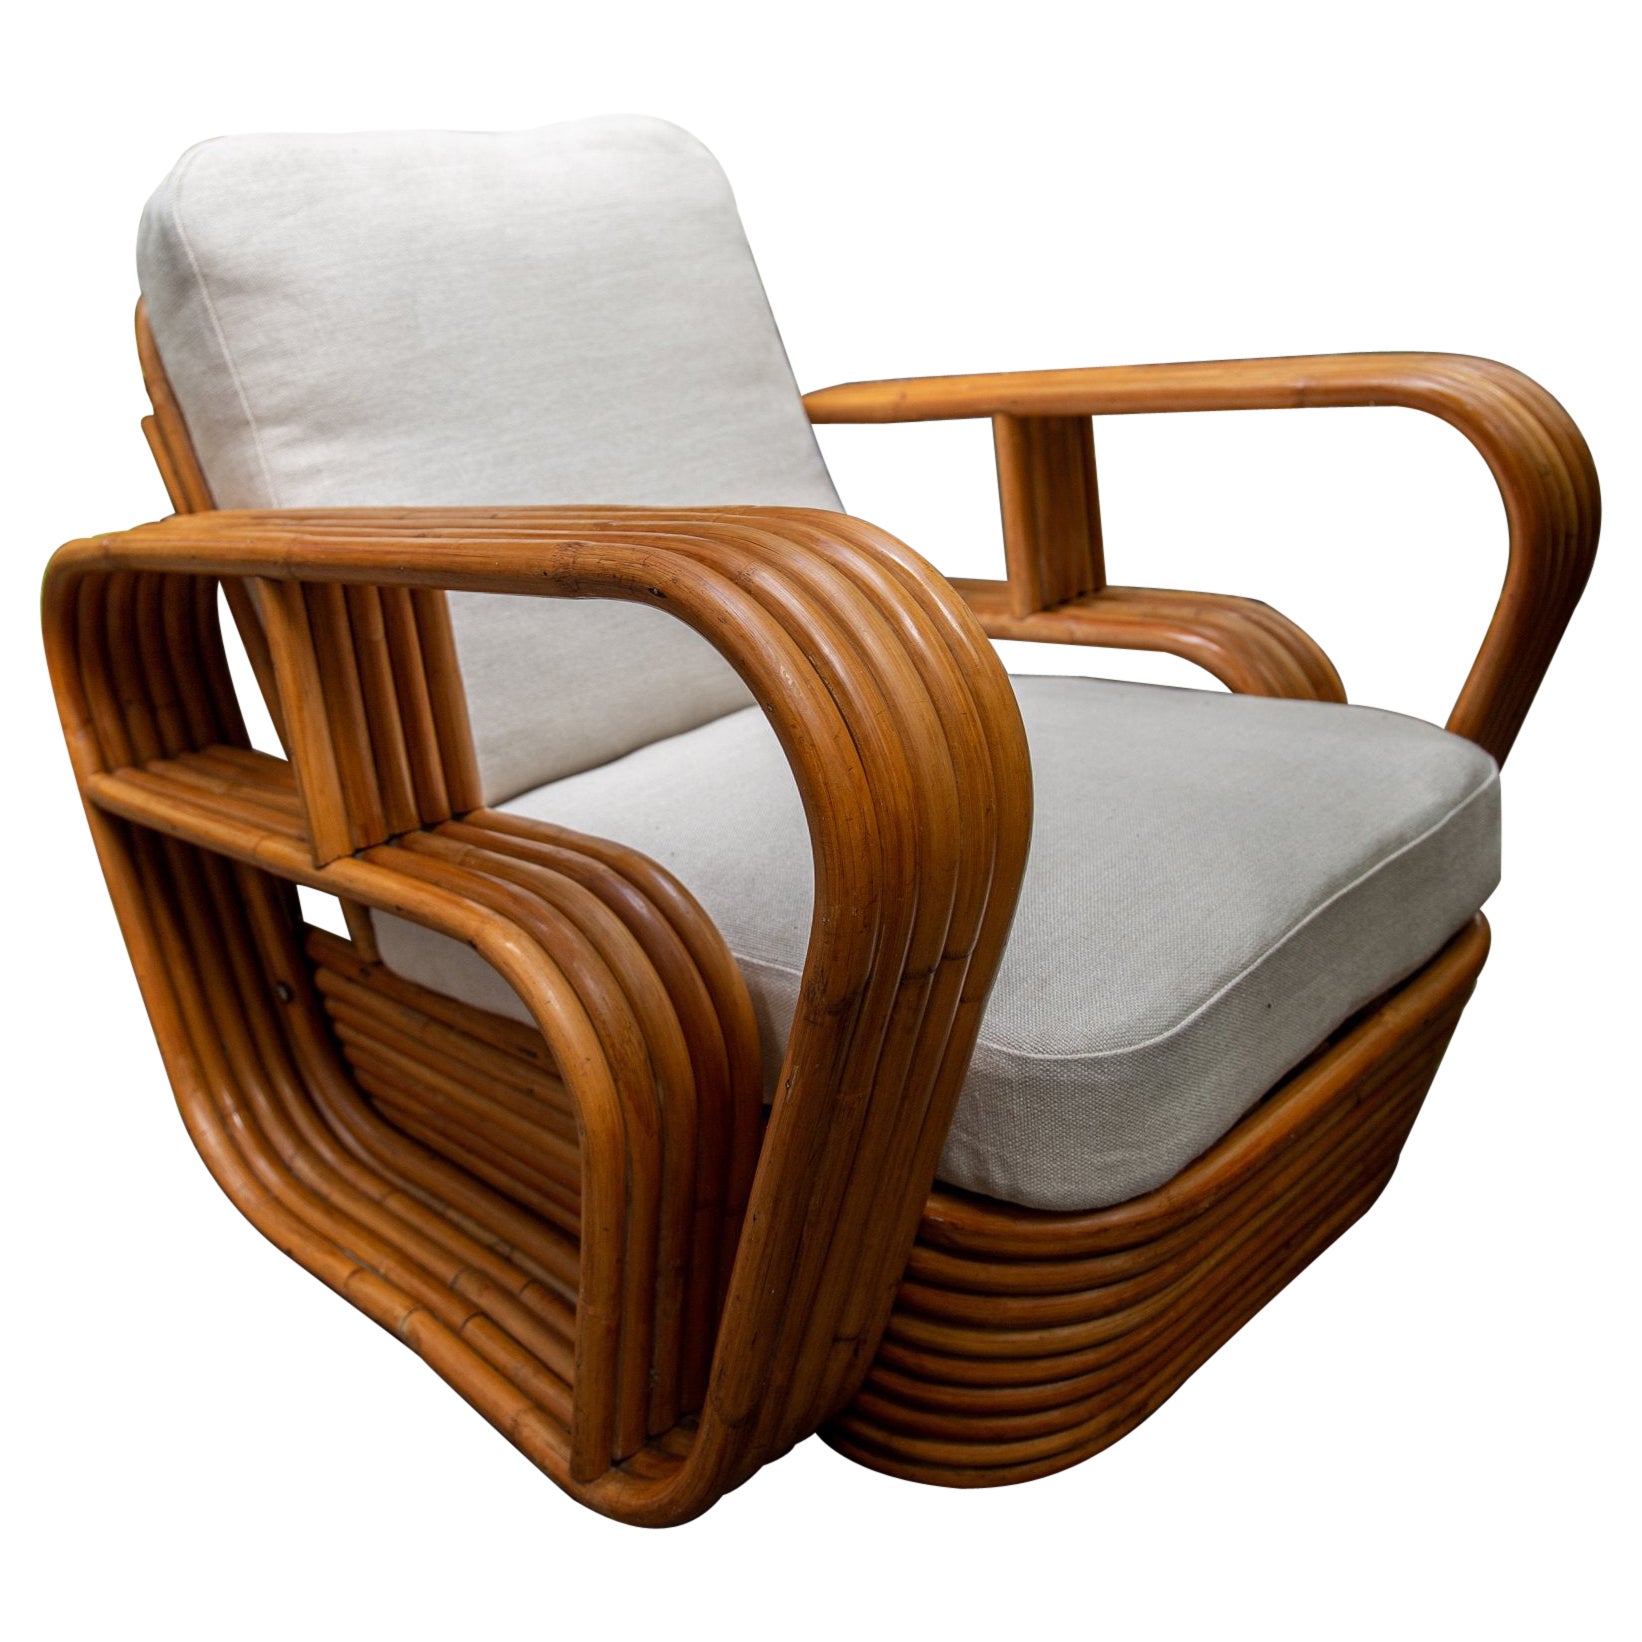 Attributed Paul Frankl Pretzel Chair, Original Art Deco Period